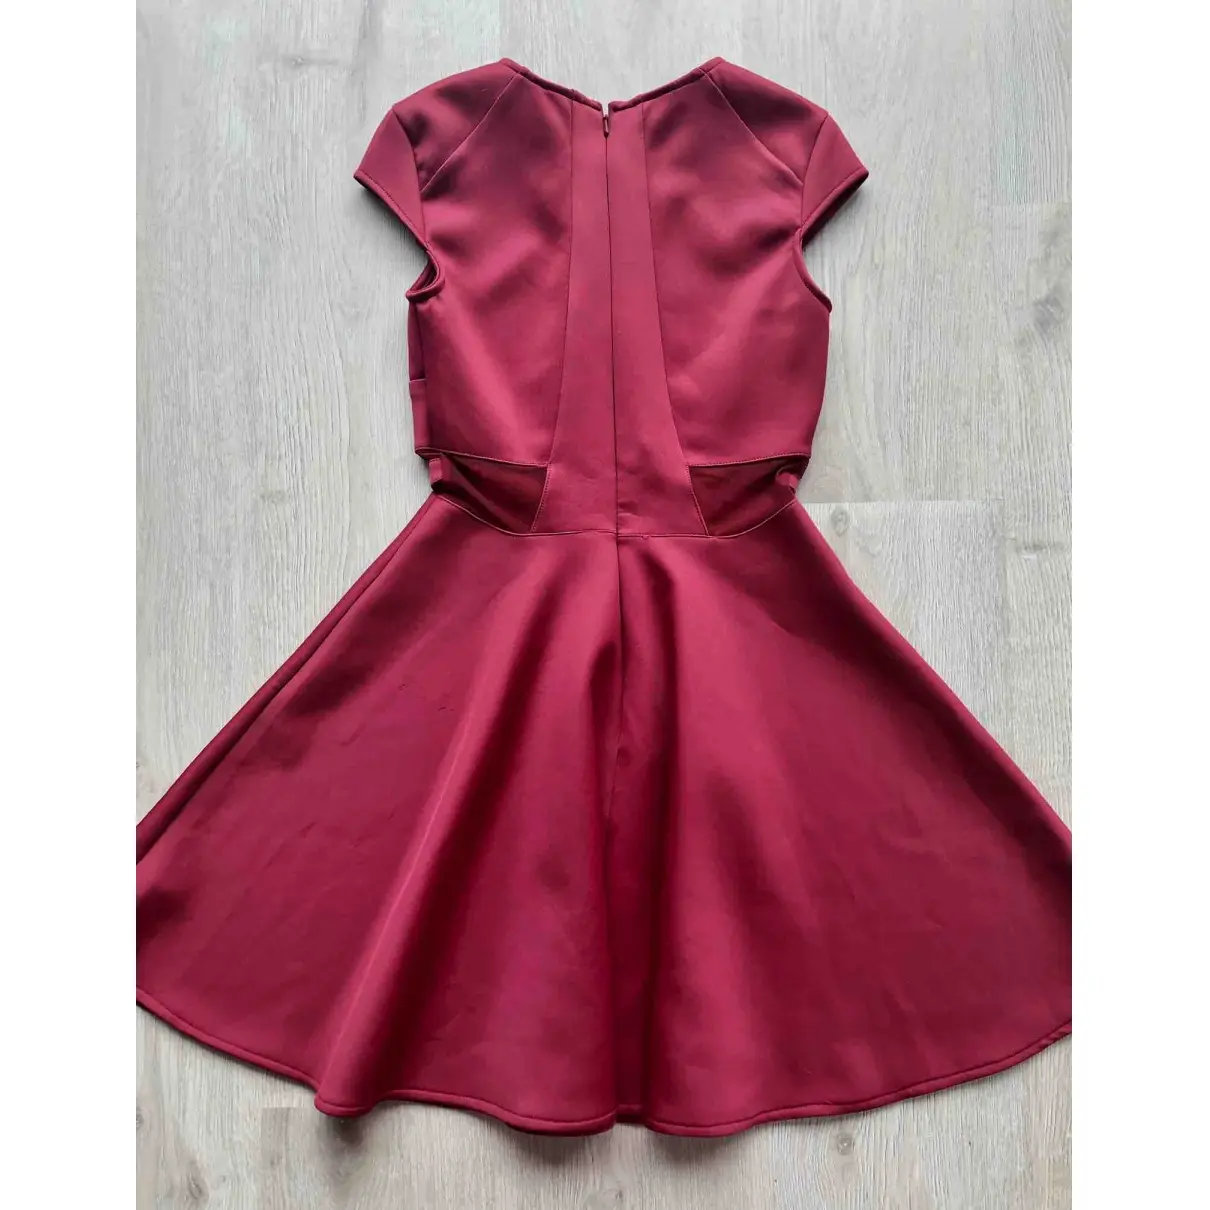 Buy Asos Mini dress online